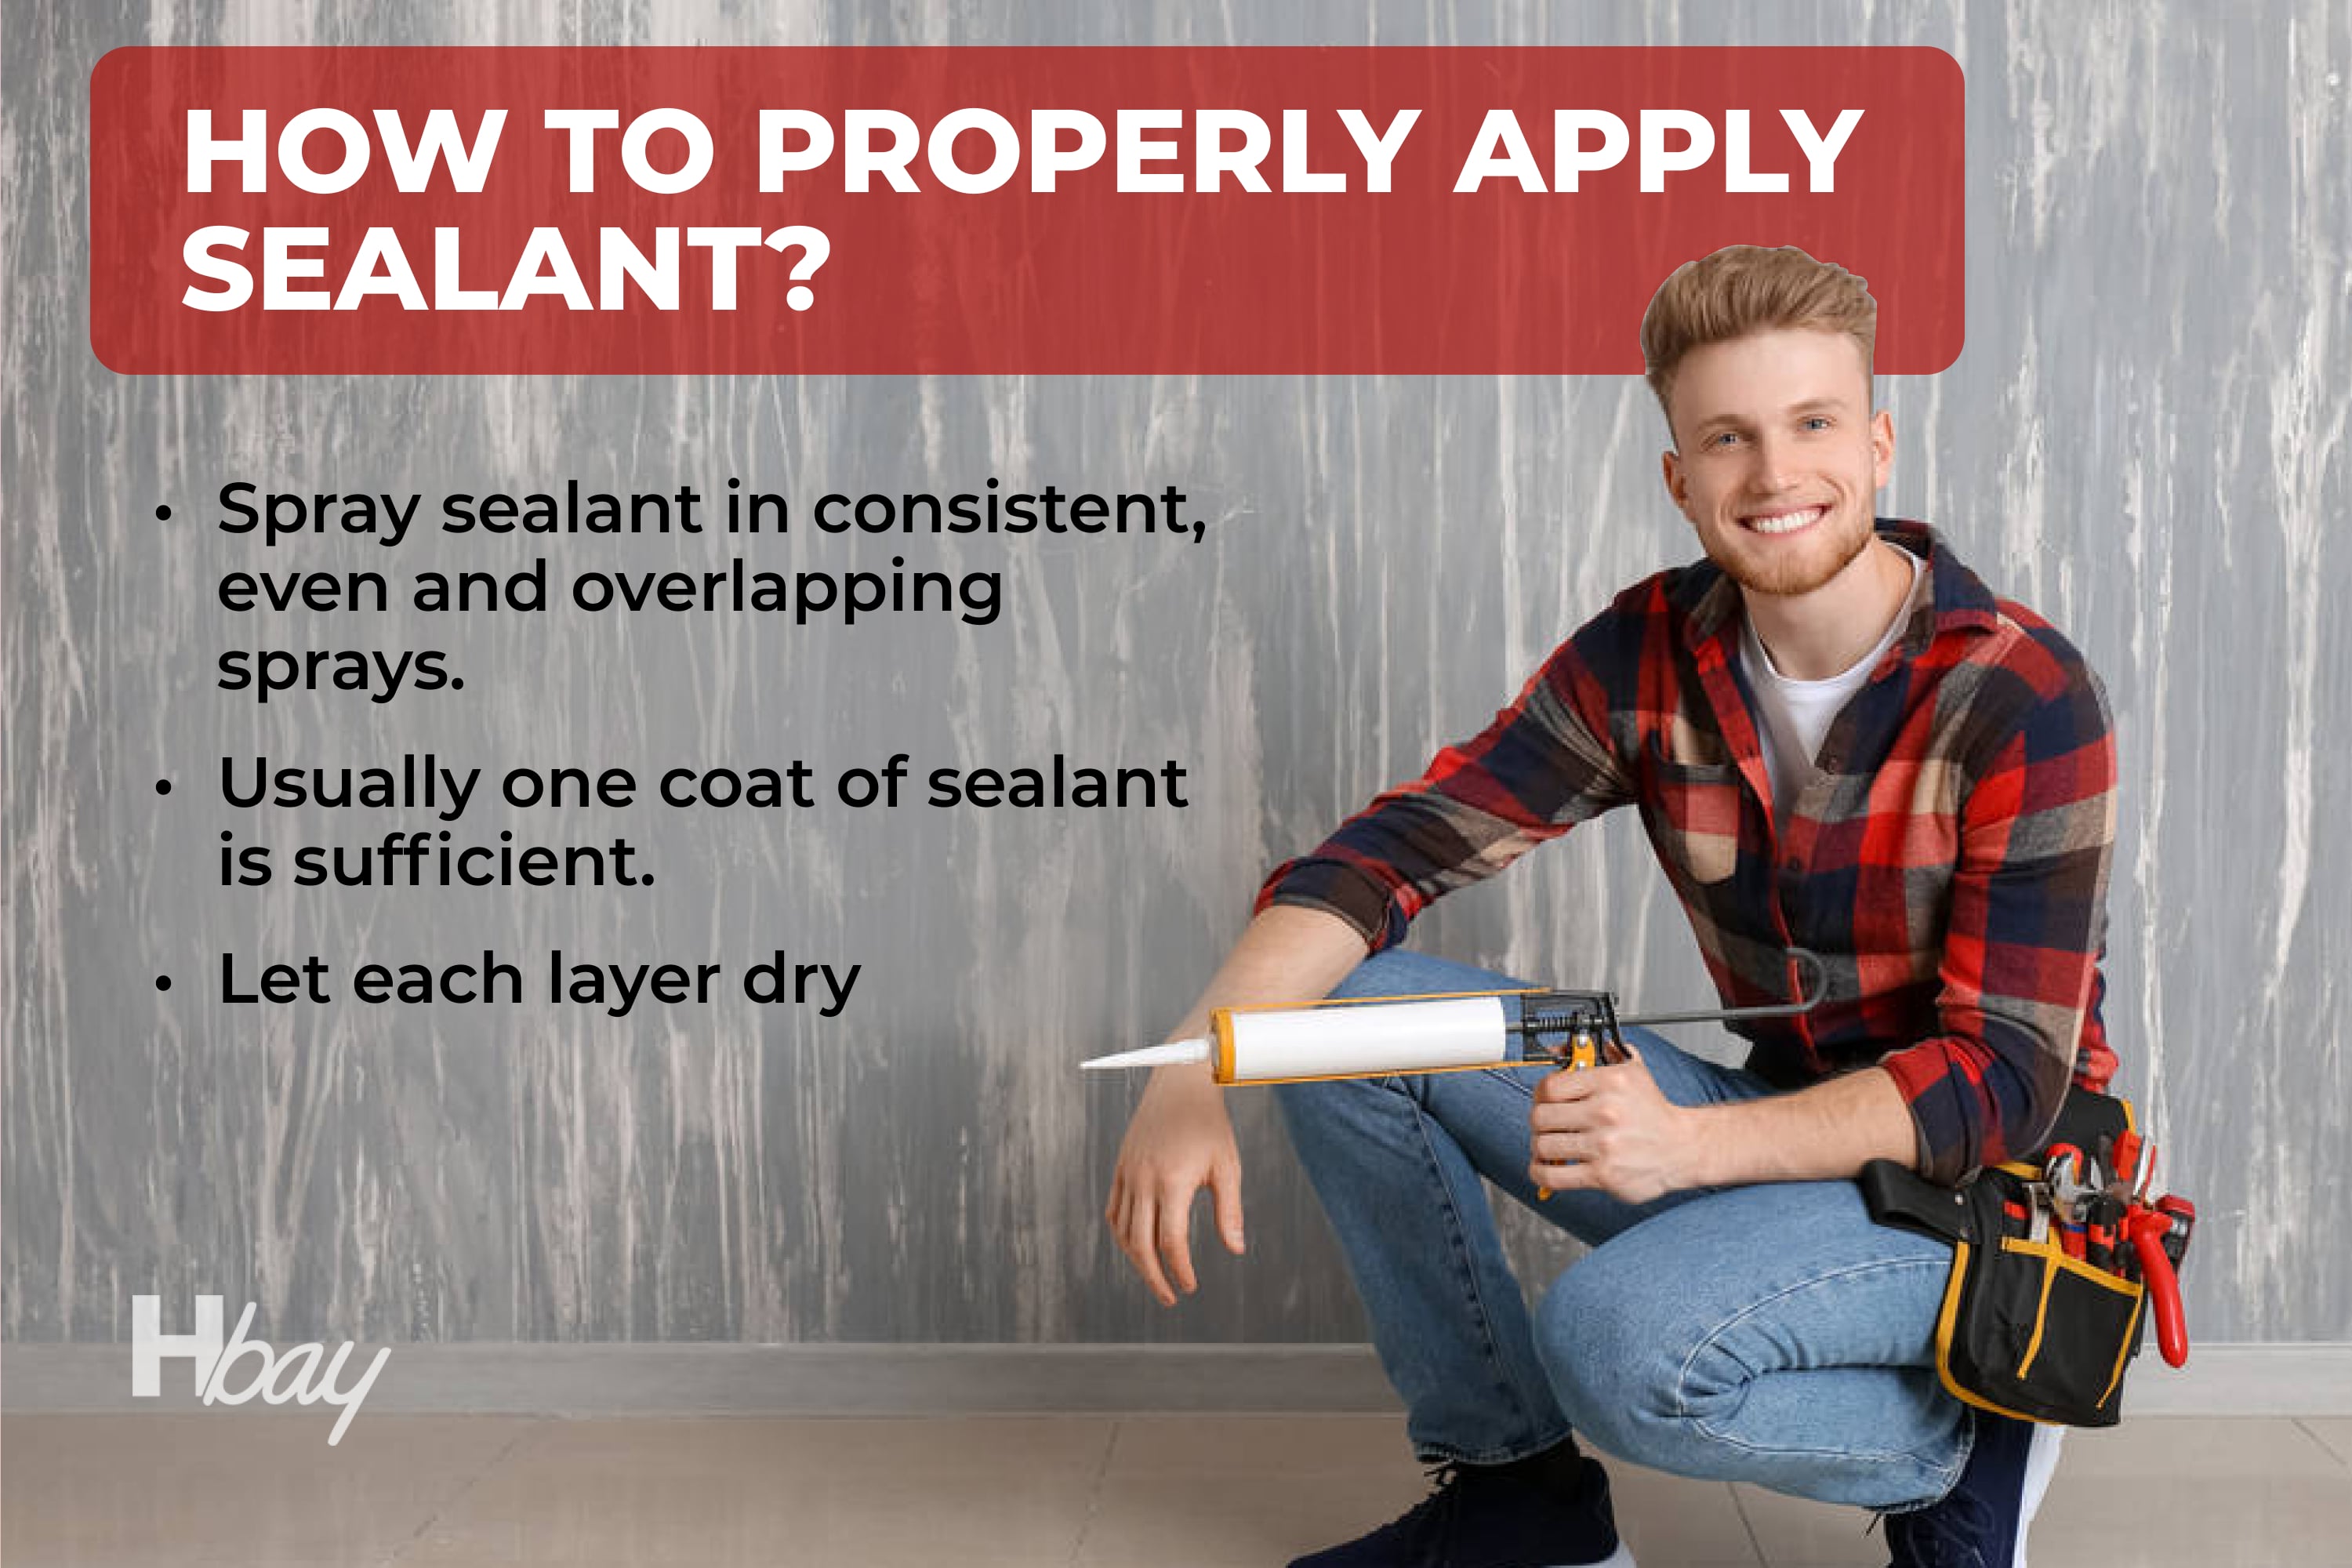 How to properly apply sealant